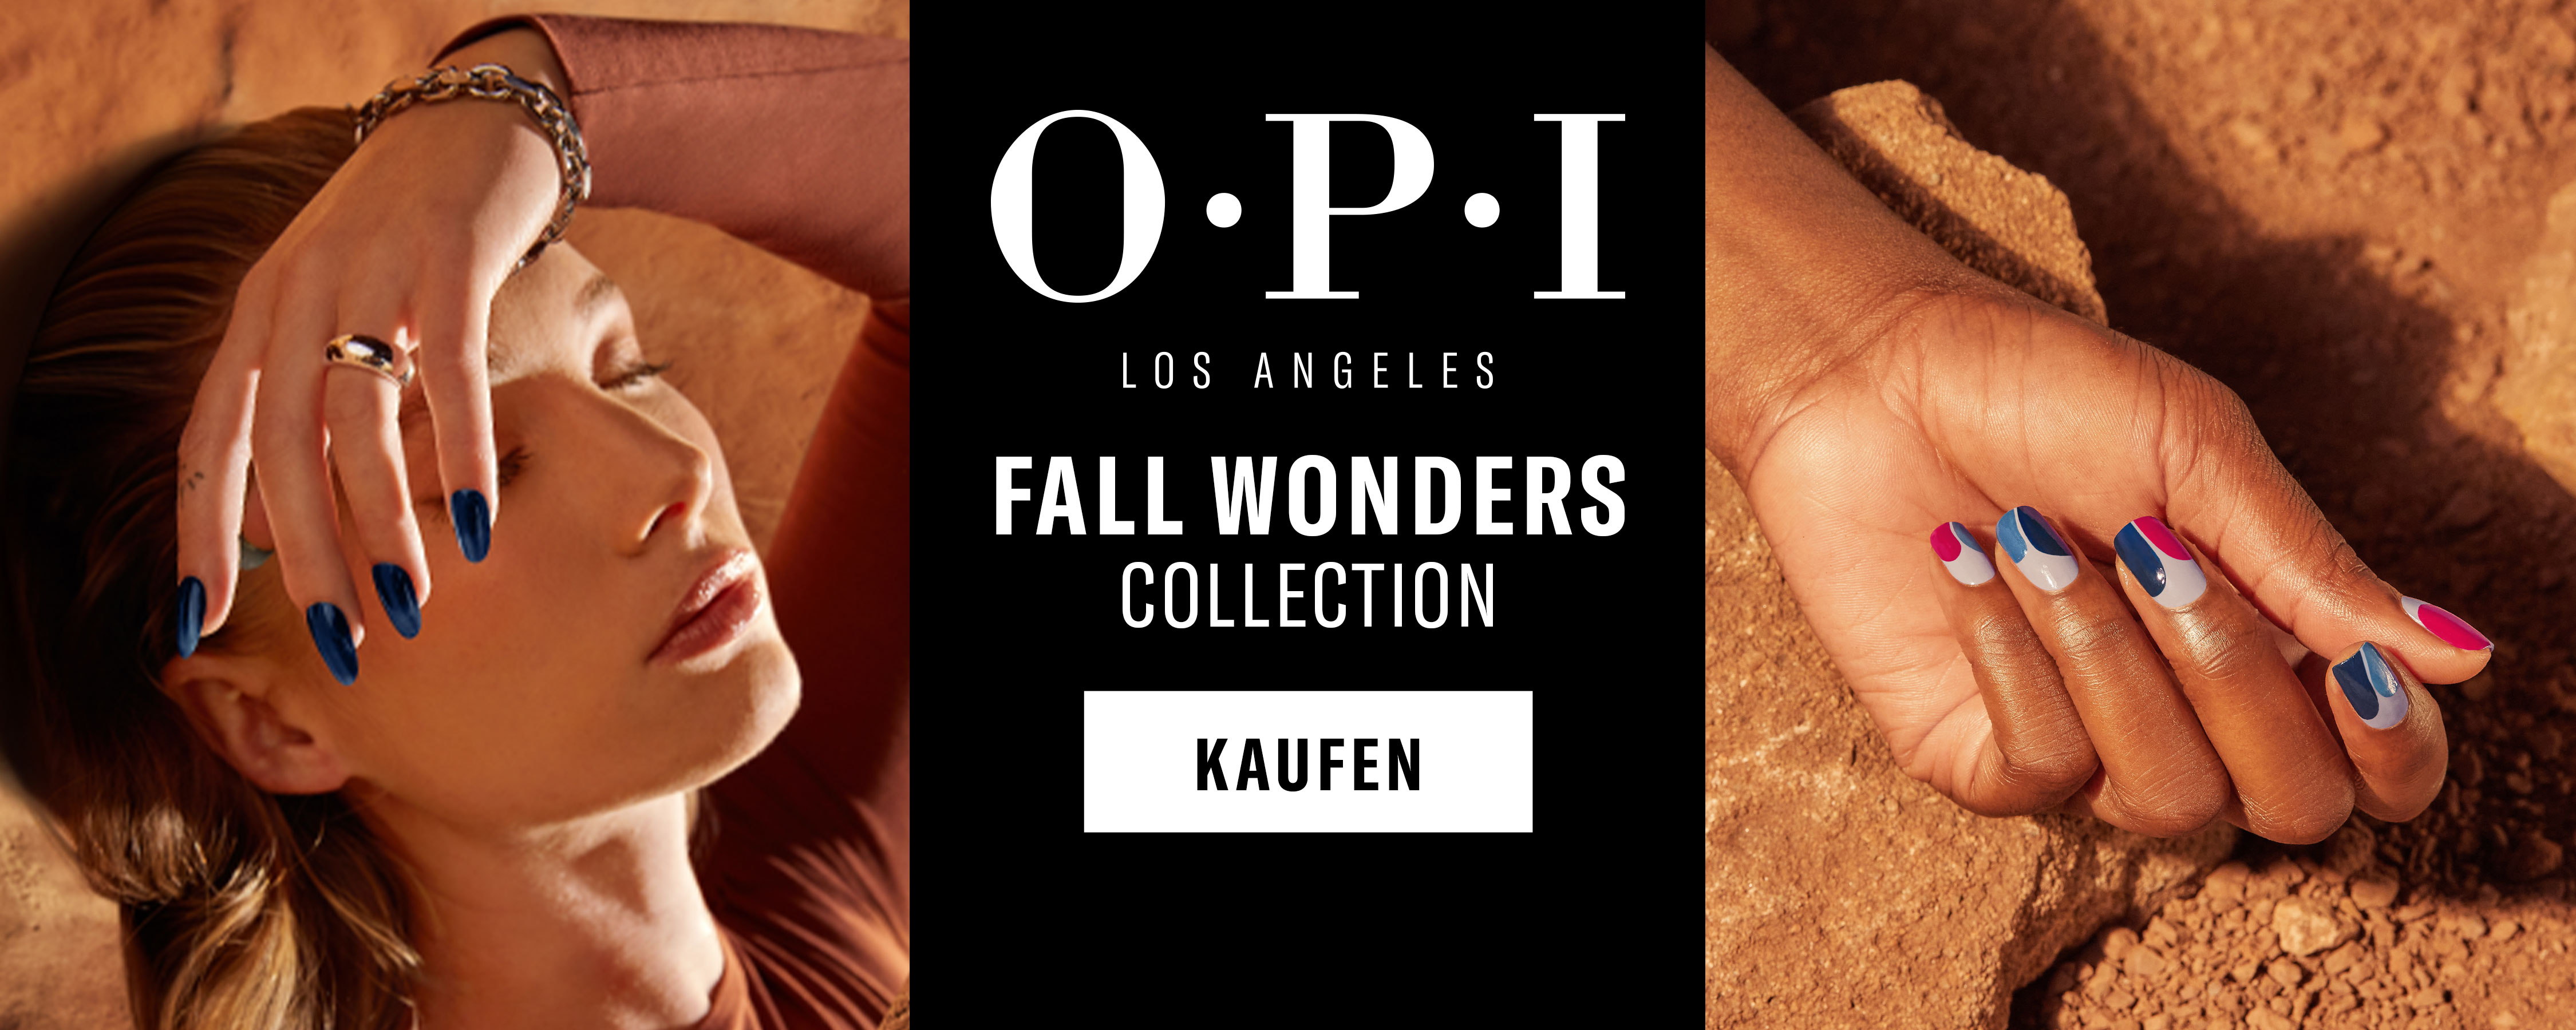 OPI Fall Wonders